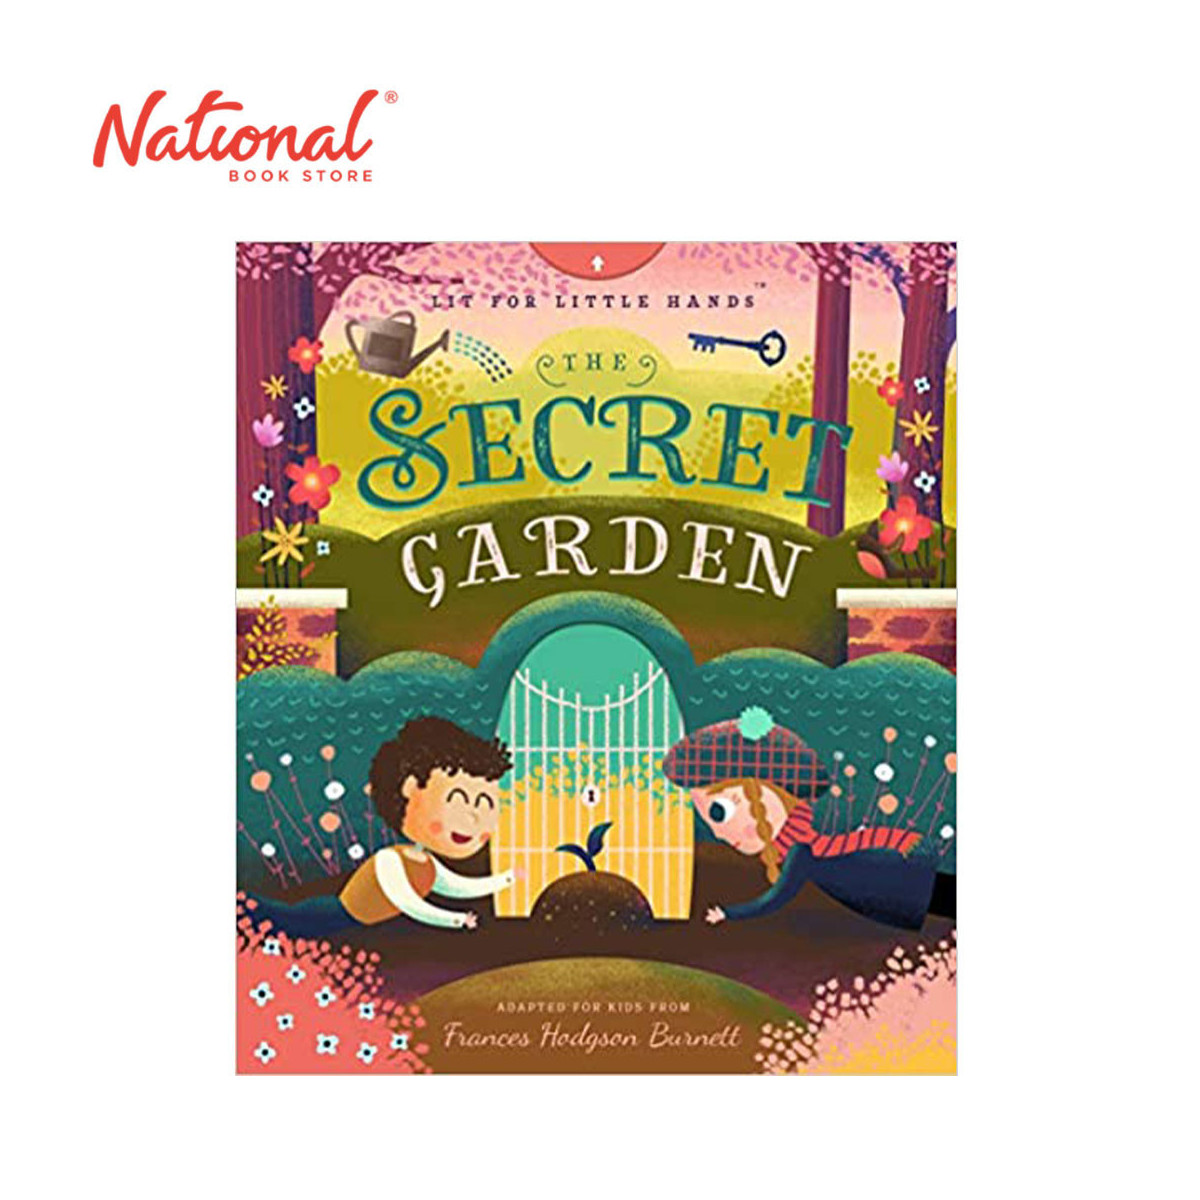 Lit For Little Hands: The Secret Garden By Brooke Jorden - Board Book - Books for Kids